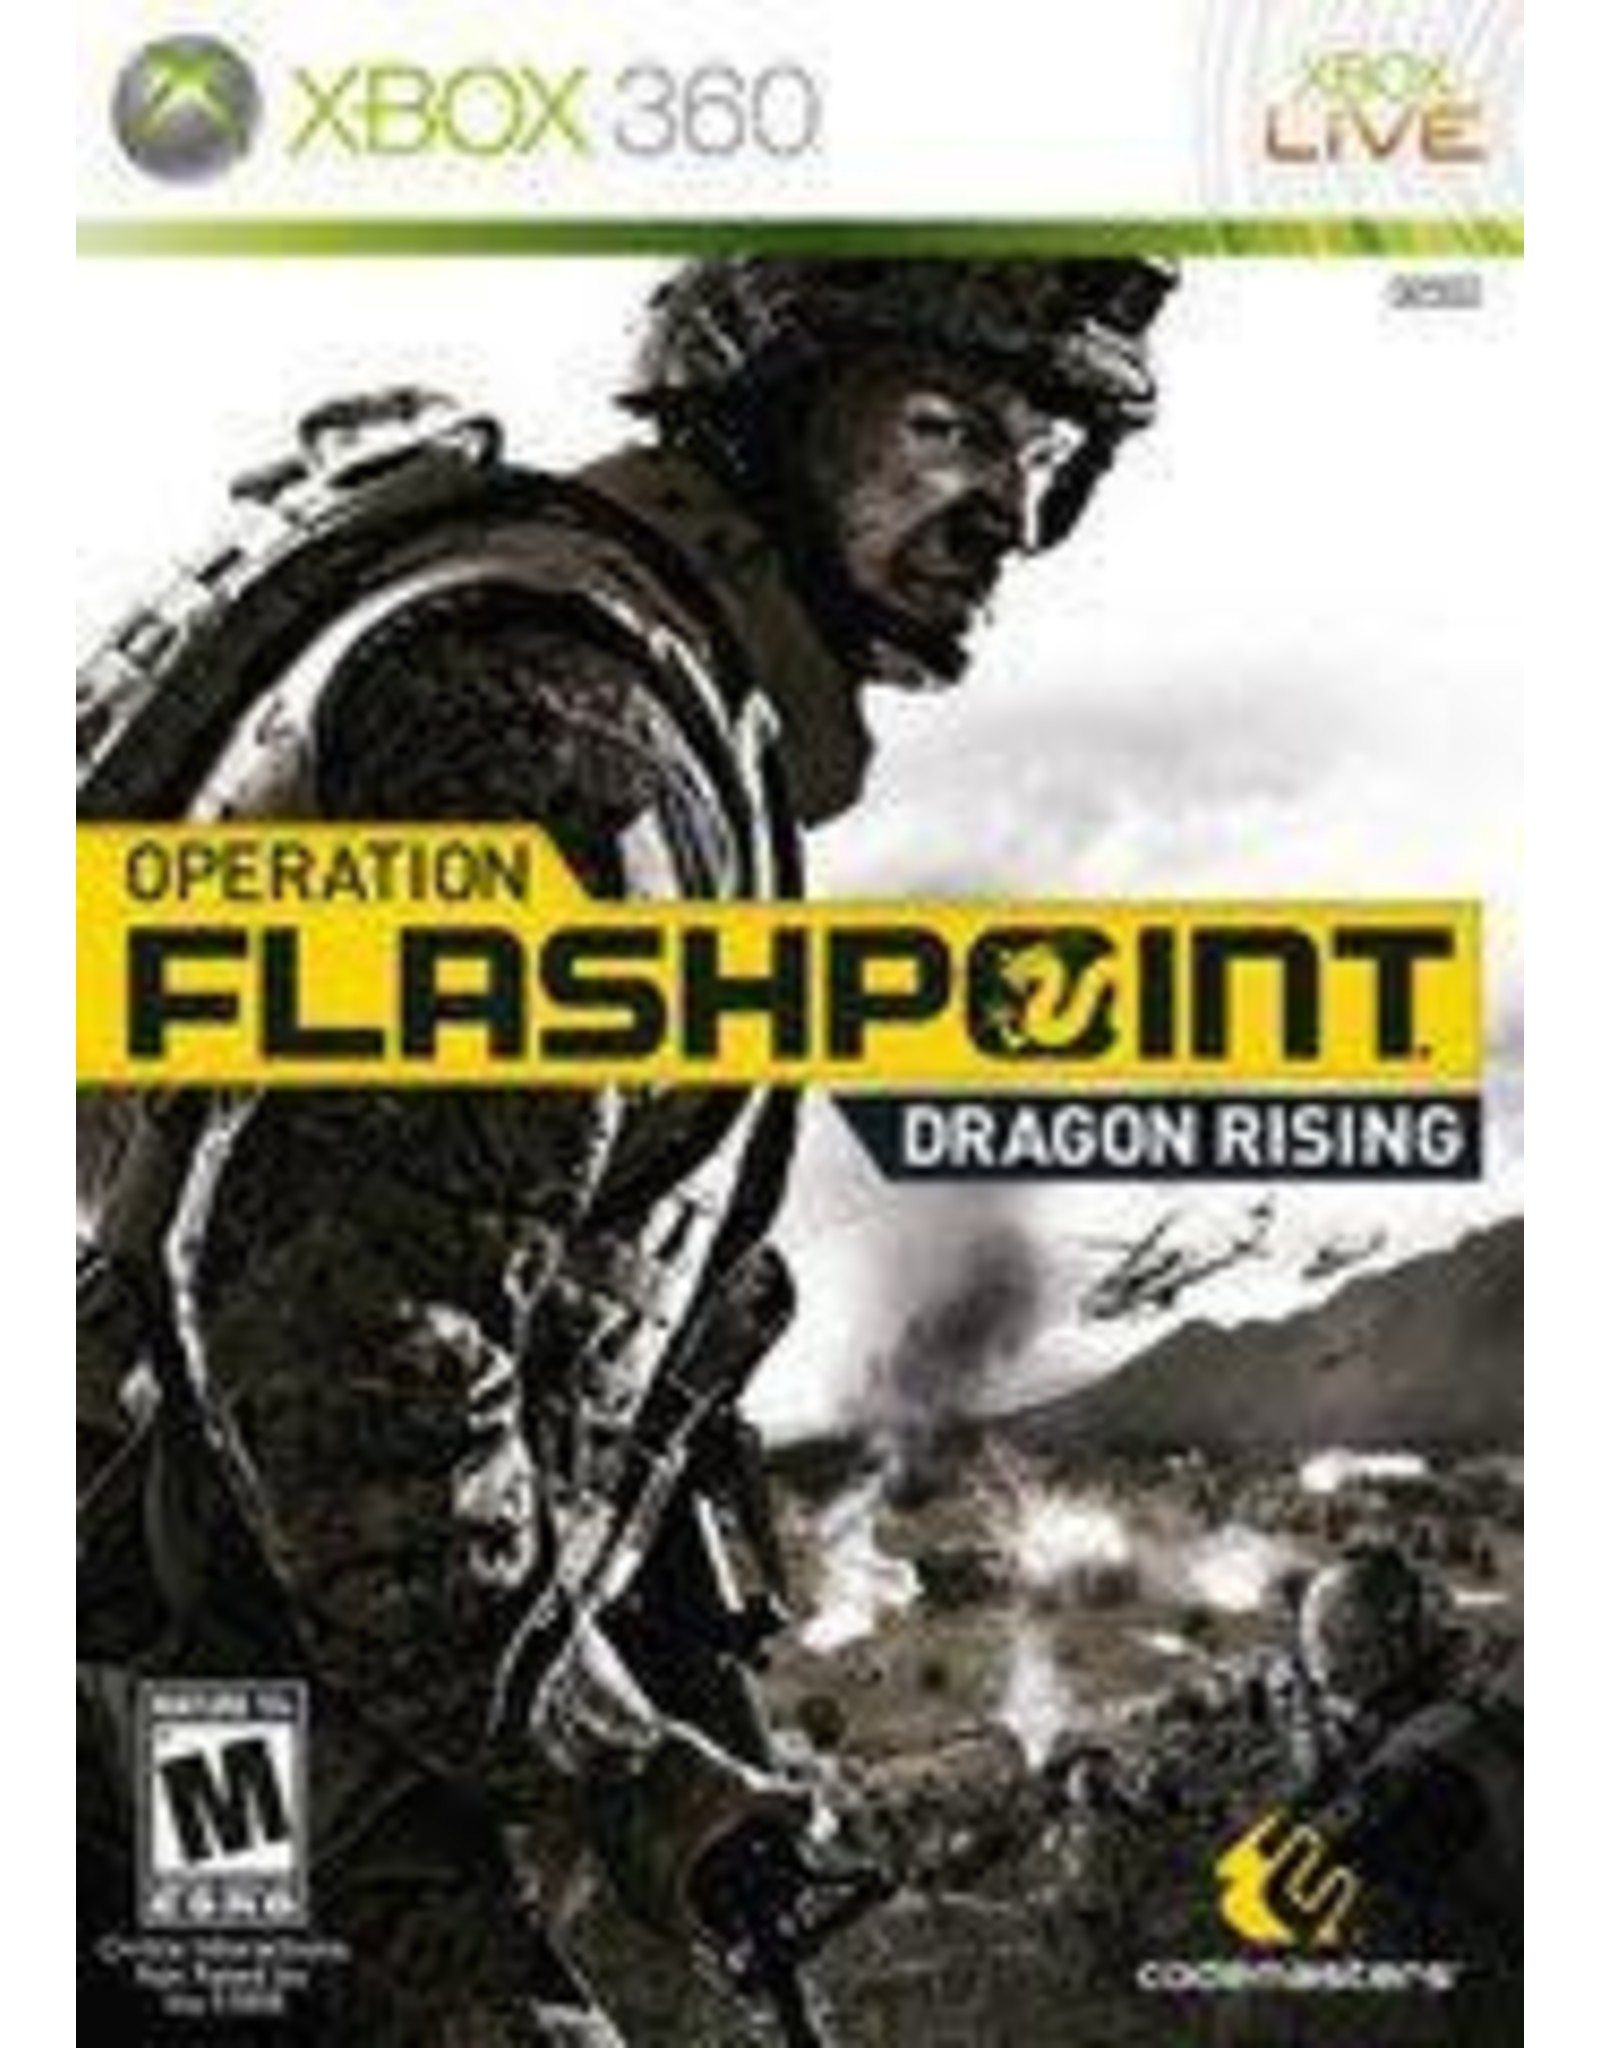 Xbox 360 Operation Flashpoint: Dragon Rising (CiB, Water Damaged Sleeve)